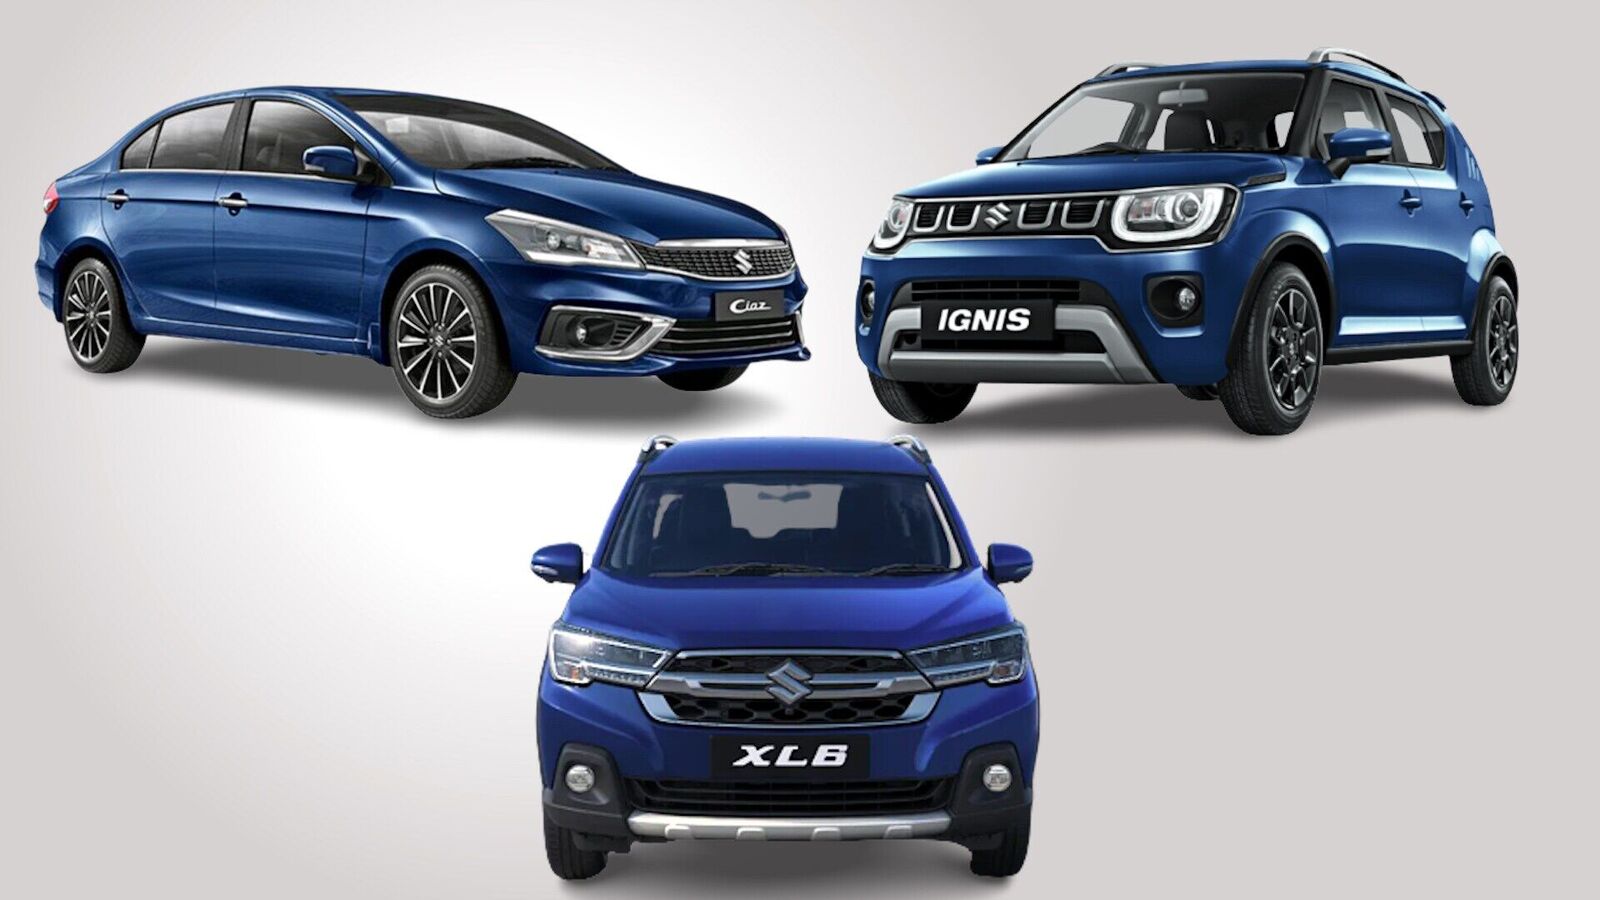 Maruti Suzuki Ignis Pros & Advantages - Why You Should Buy